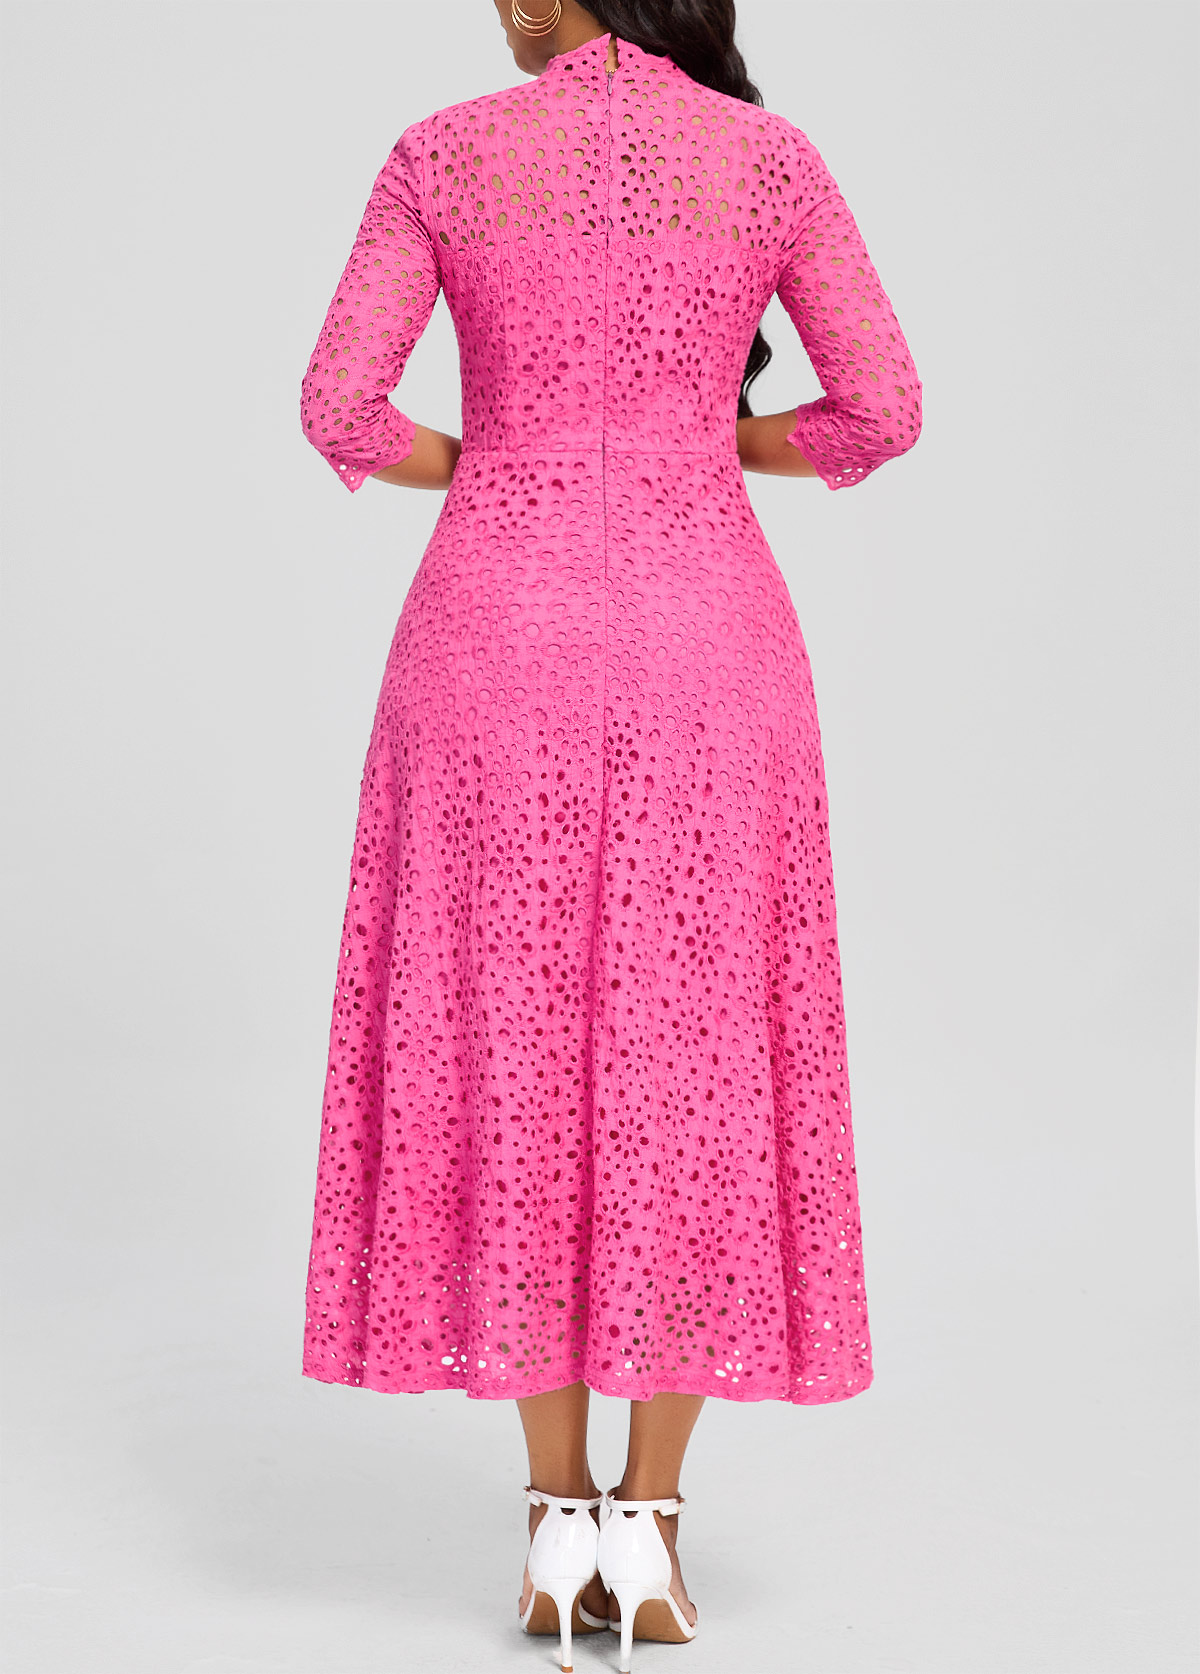 Embroidery Hot Pink Three Quarter Length Sleeve Dress